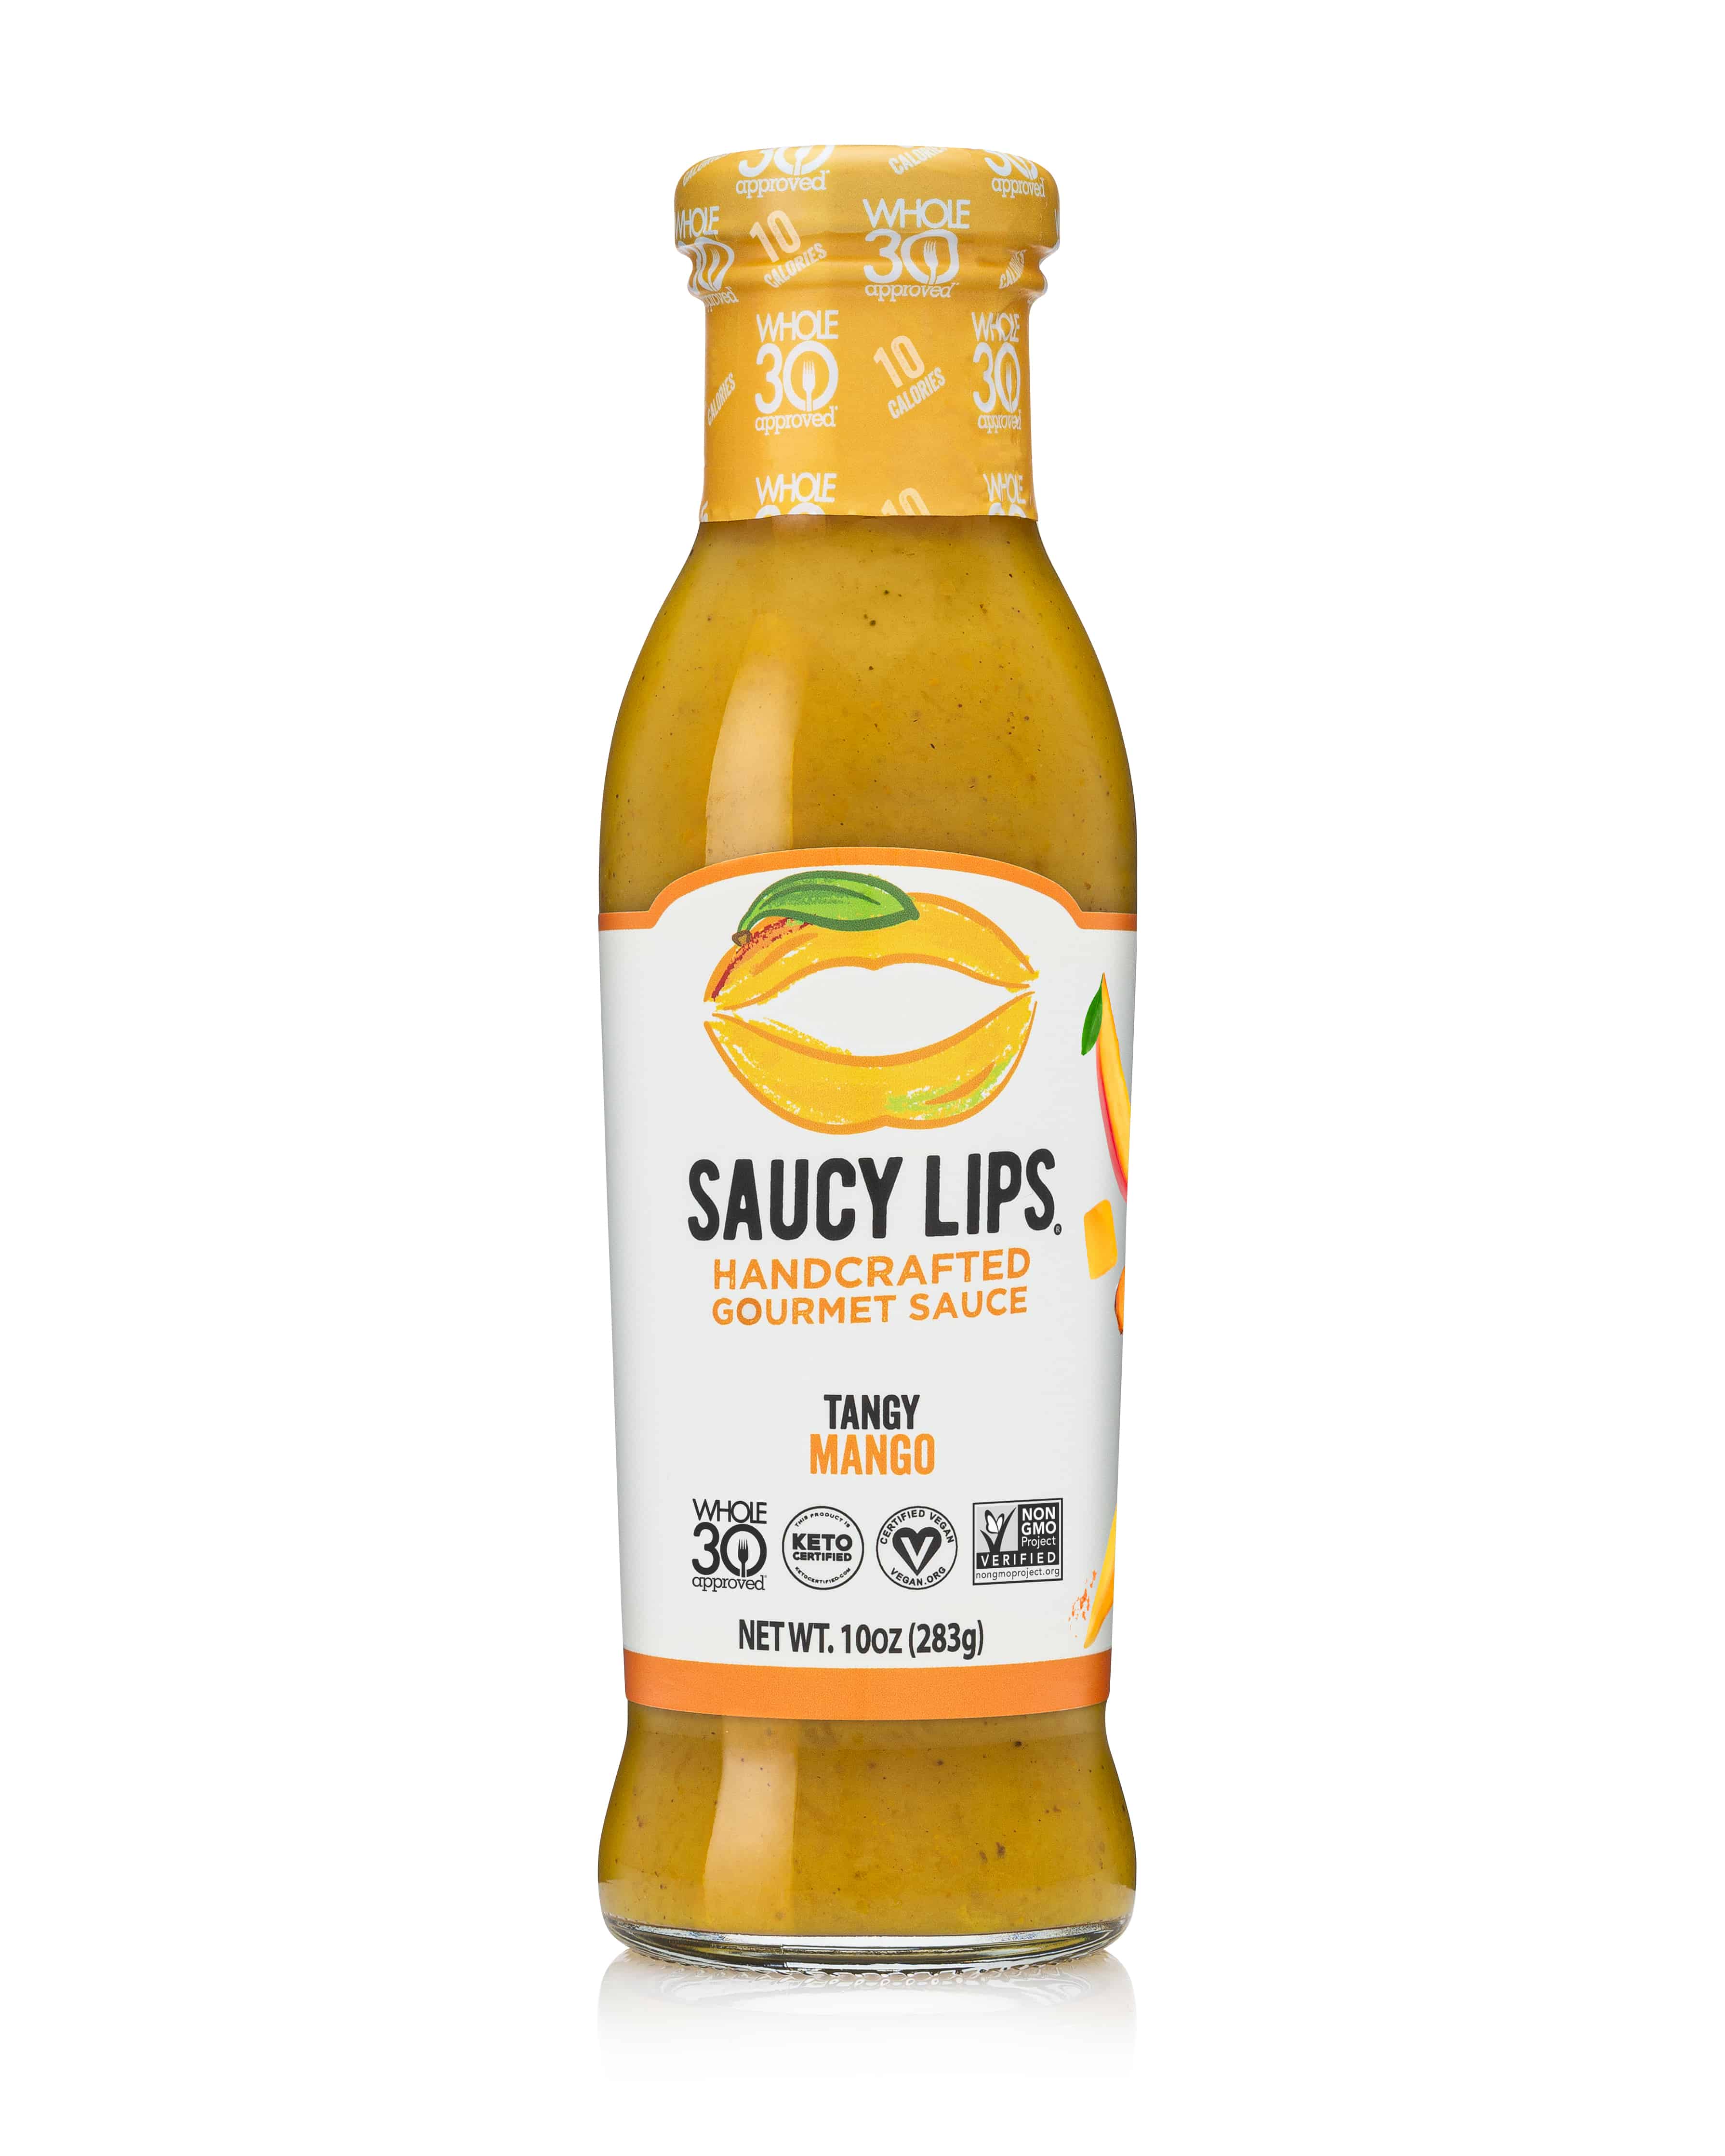 Saucy Lips Tangy Mango Gourmet Sauce 6 units per case